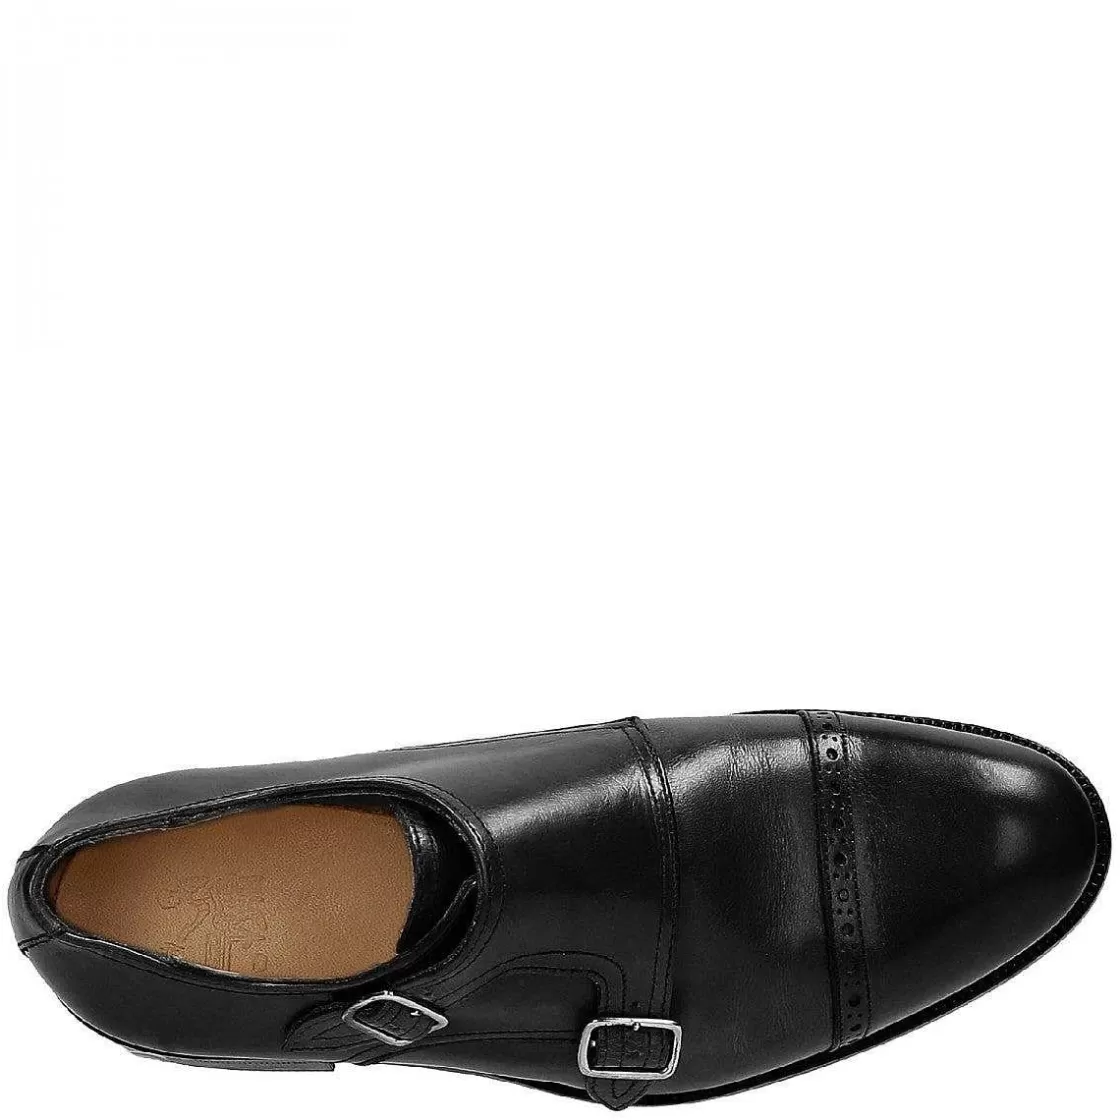 Leonardo Handmade Men'S Double Buckle Shoes In Black Leather Online